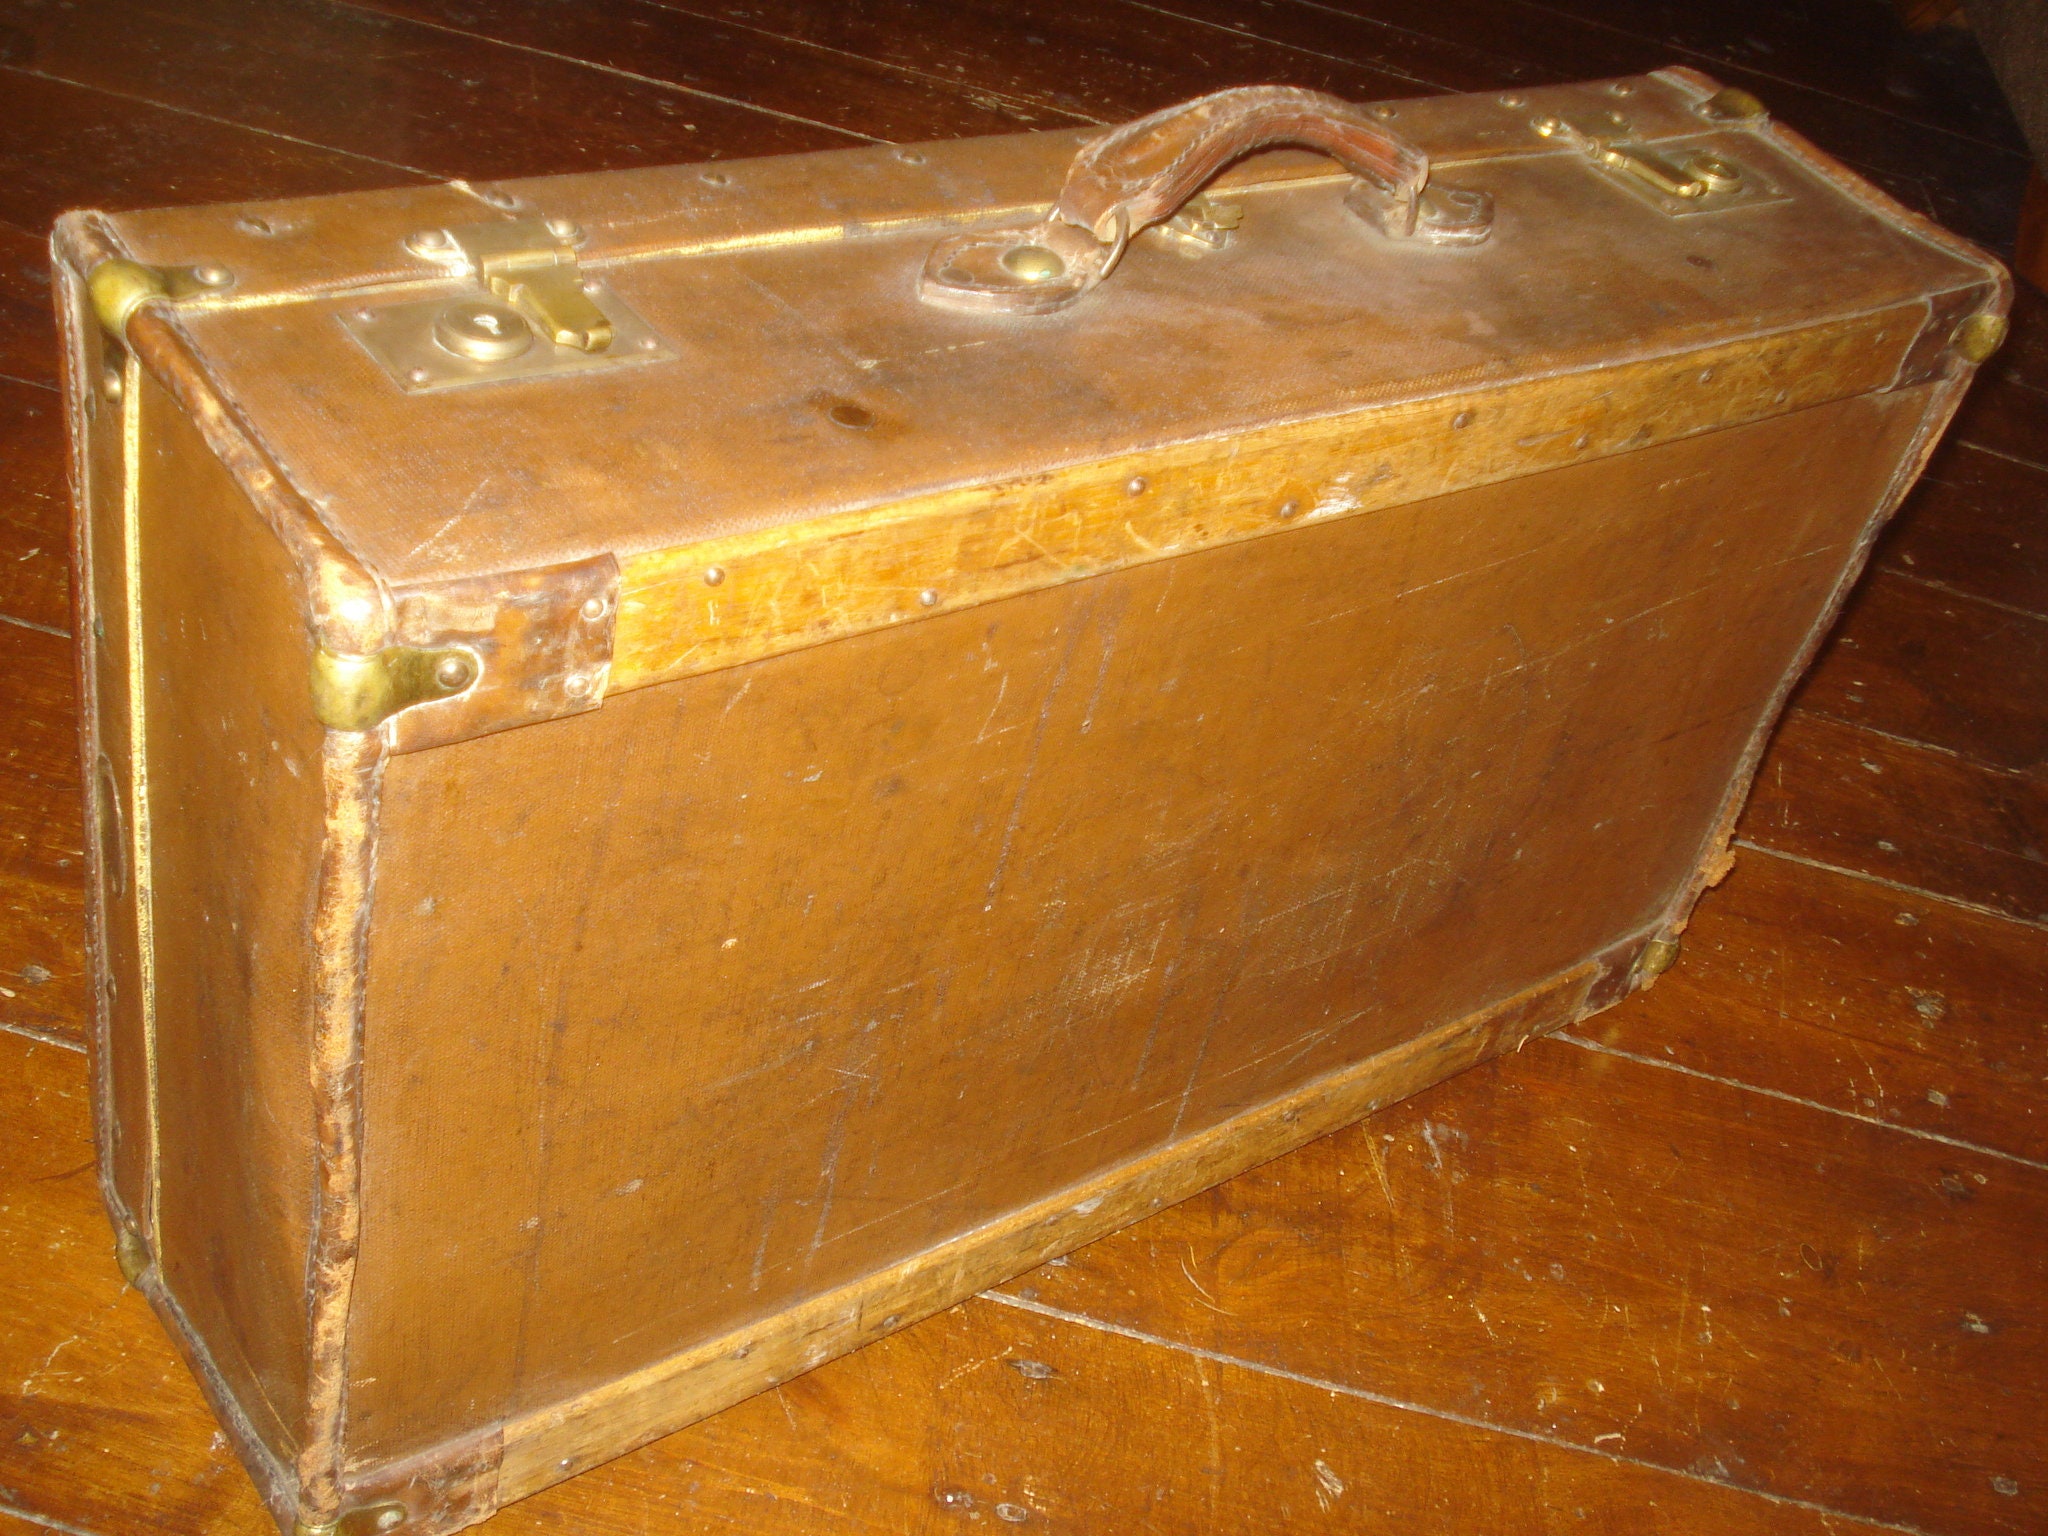 1800's Luggage 